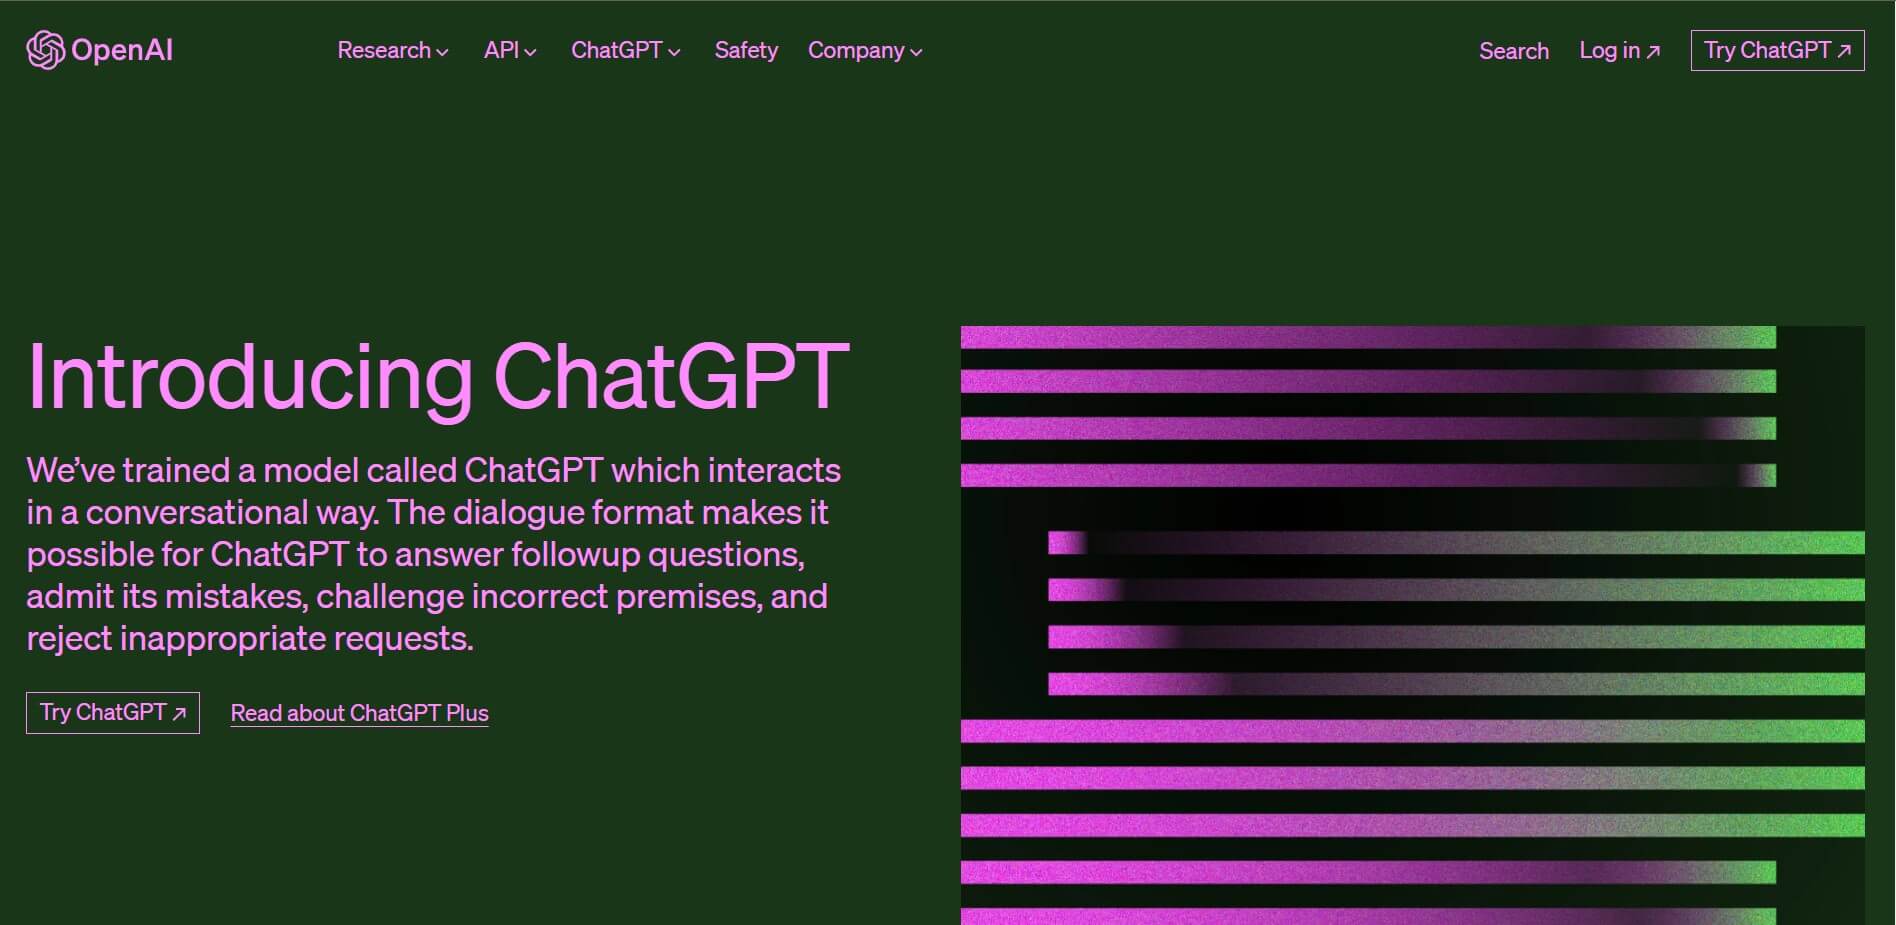 OpenAi chatGPT summarizer for text